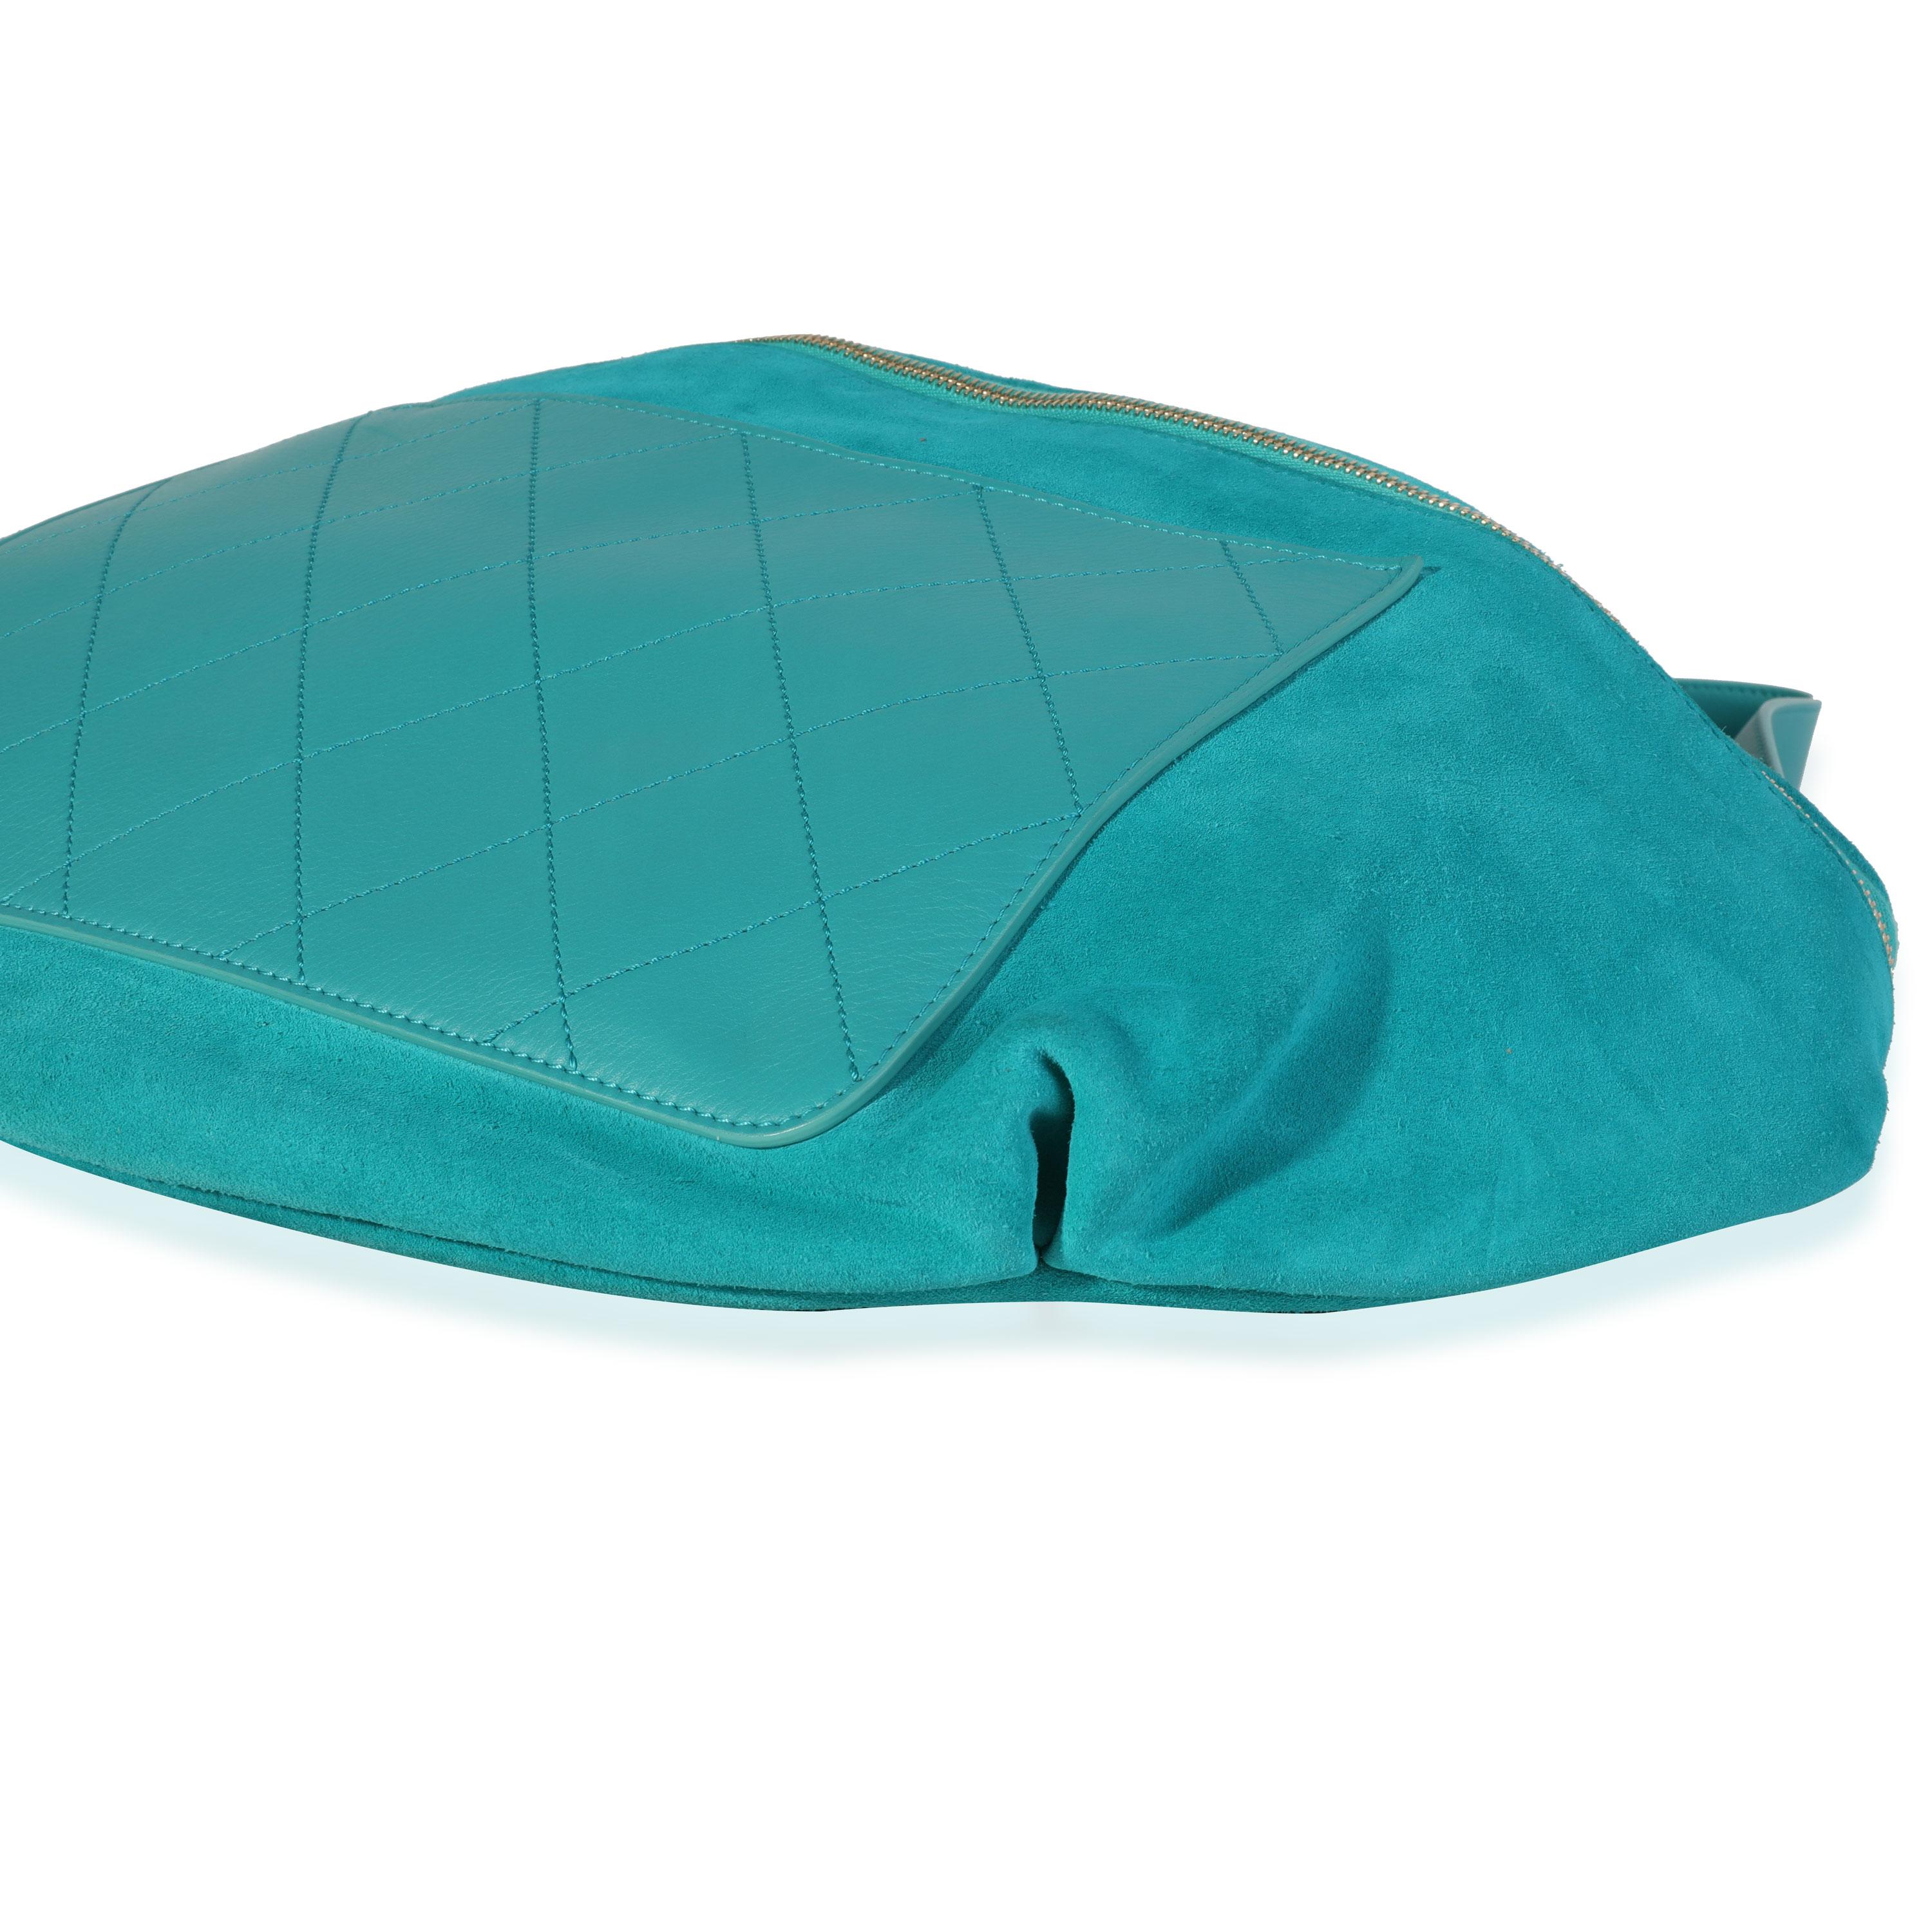 Blue Chanel x Pharrell Williams Teal Suede & Quilted Calfskin Oversize Waist Bag